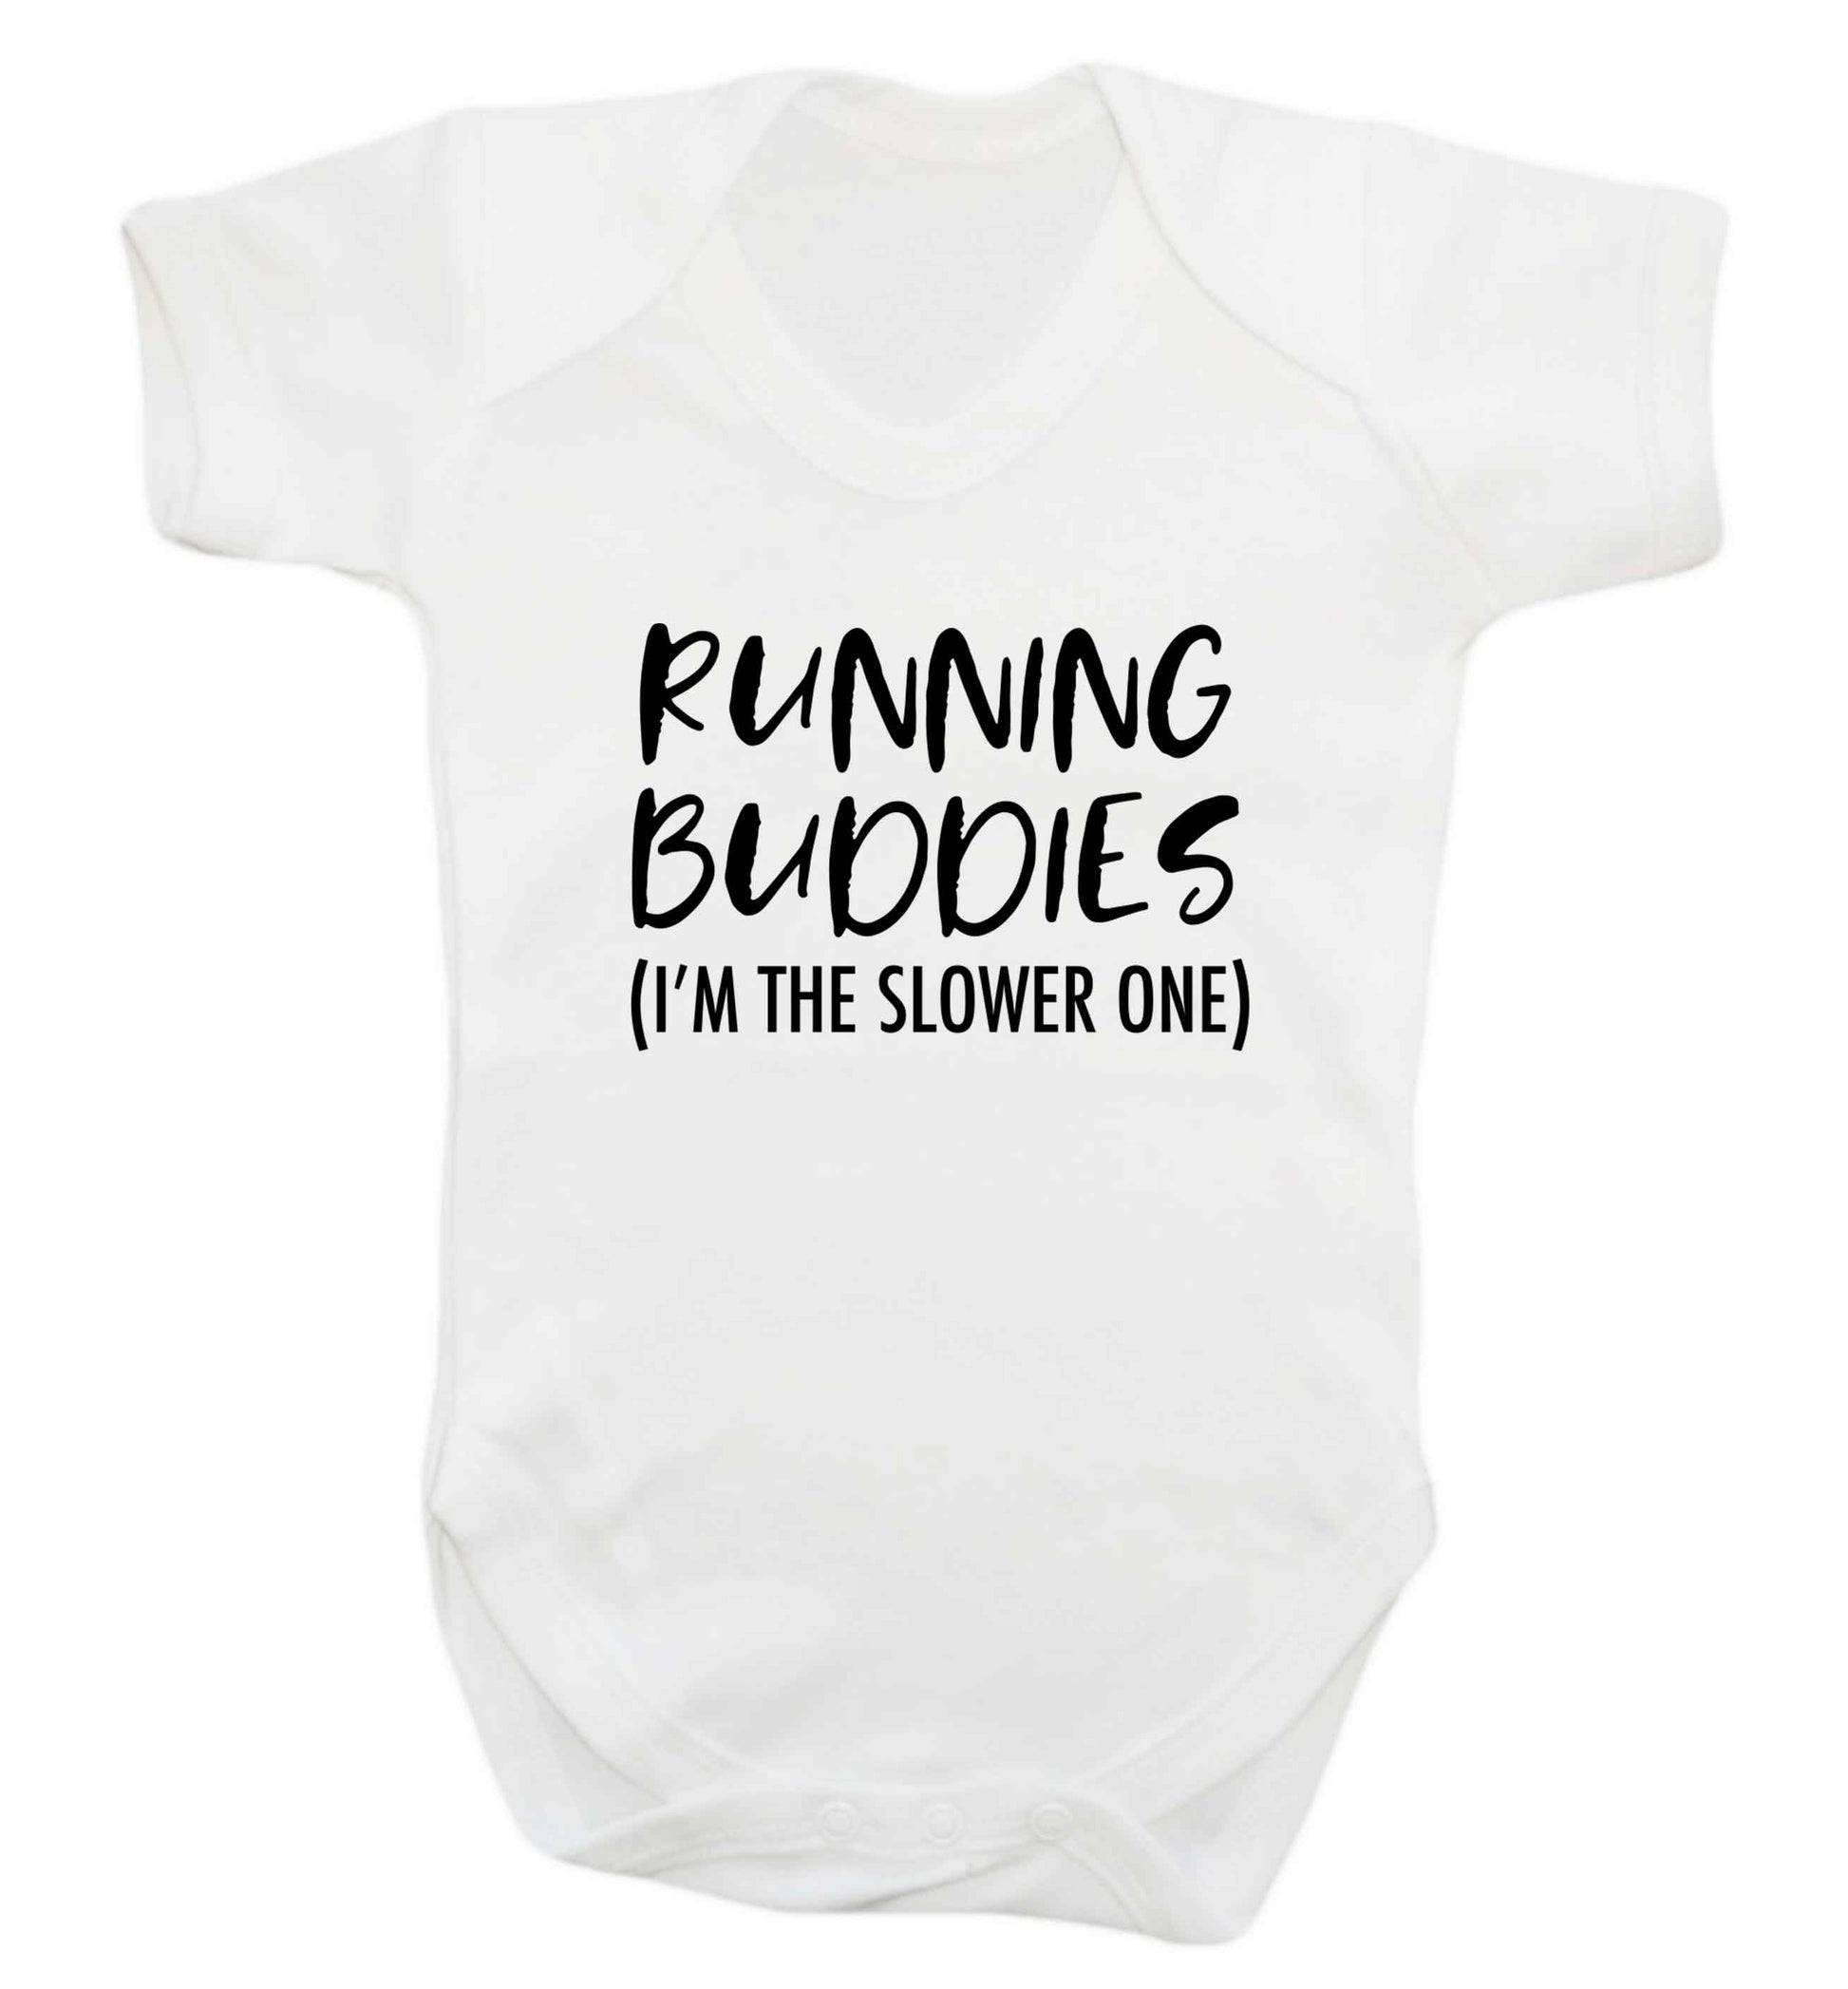 Running buddies (I'm the slower one) baby vest white 18-24 months